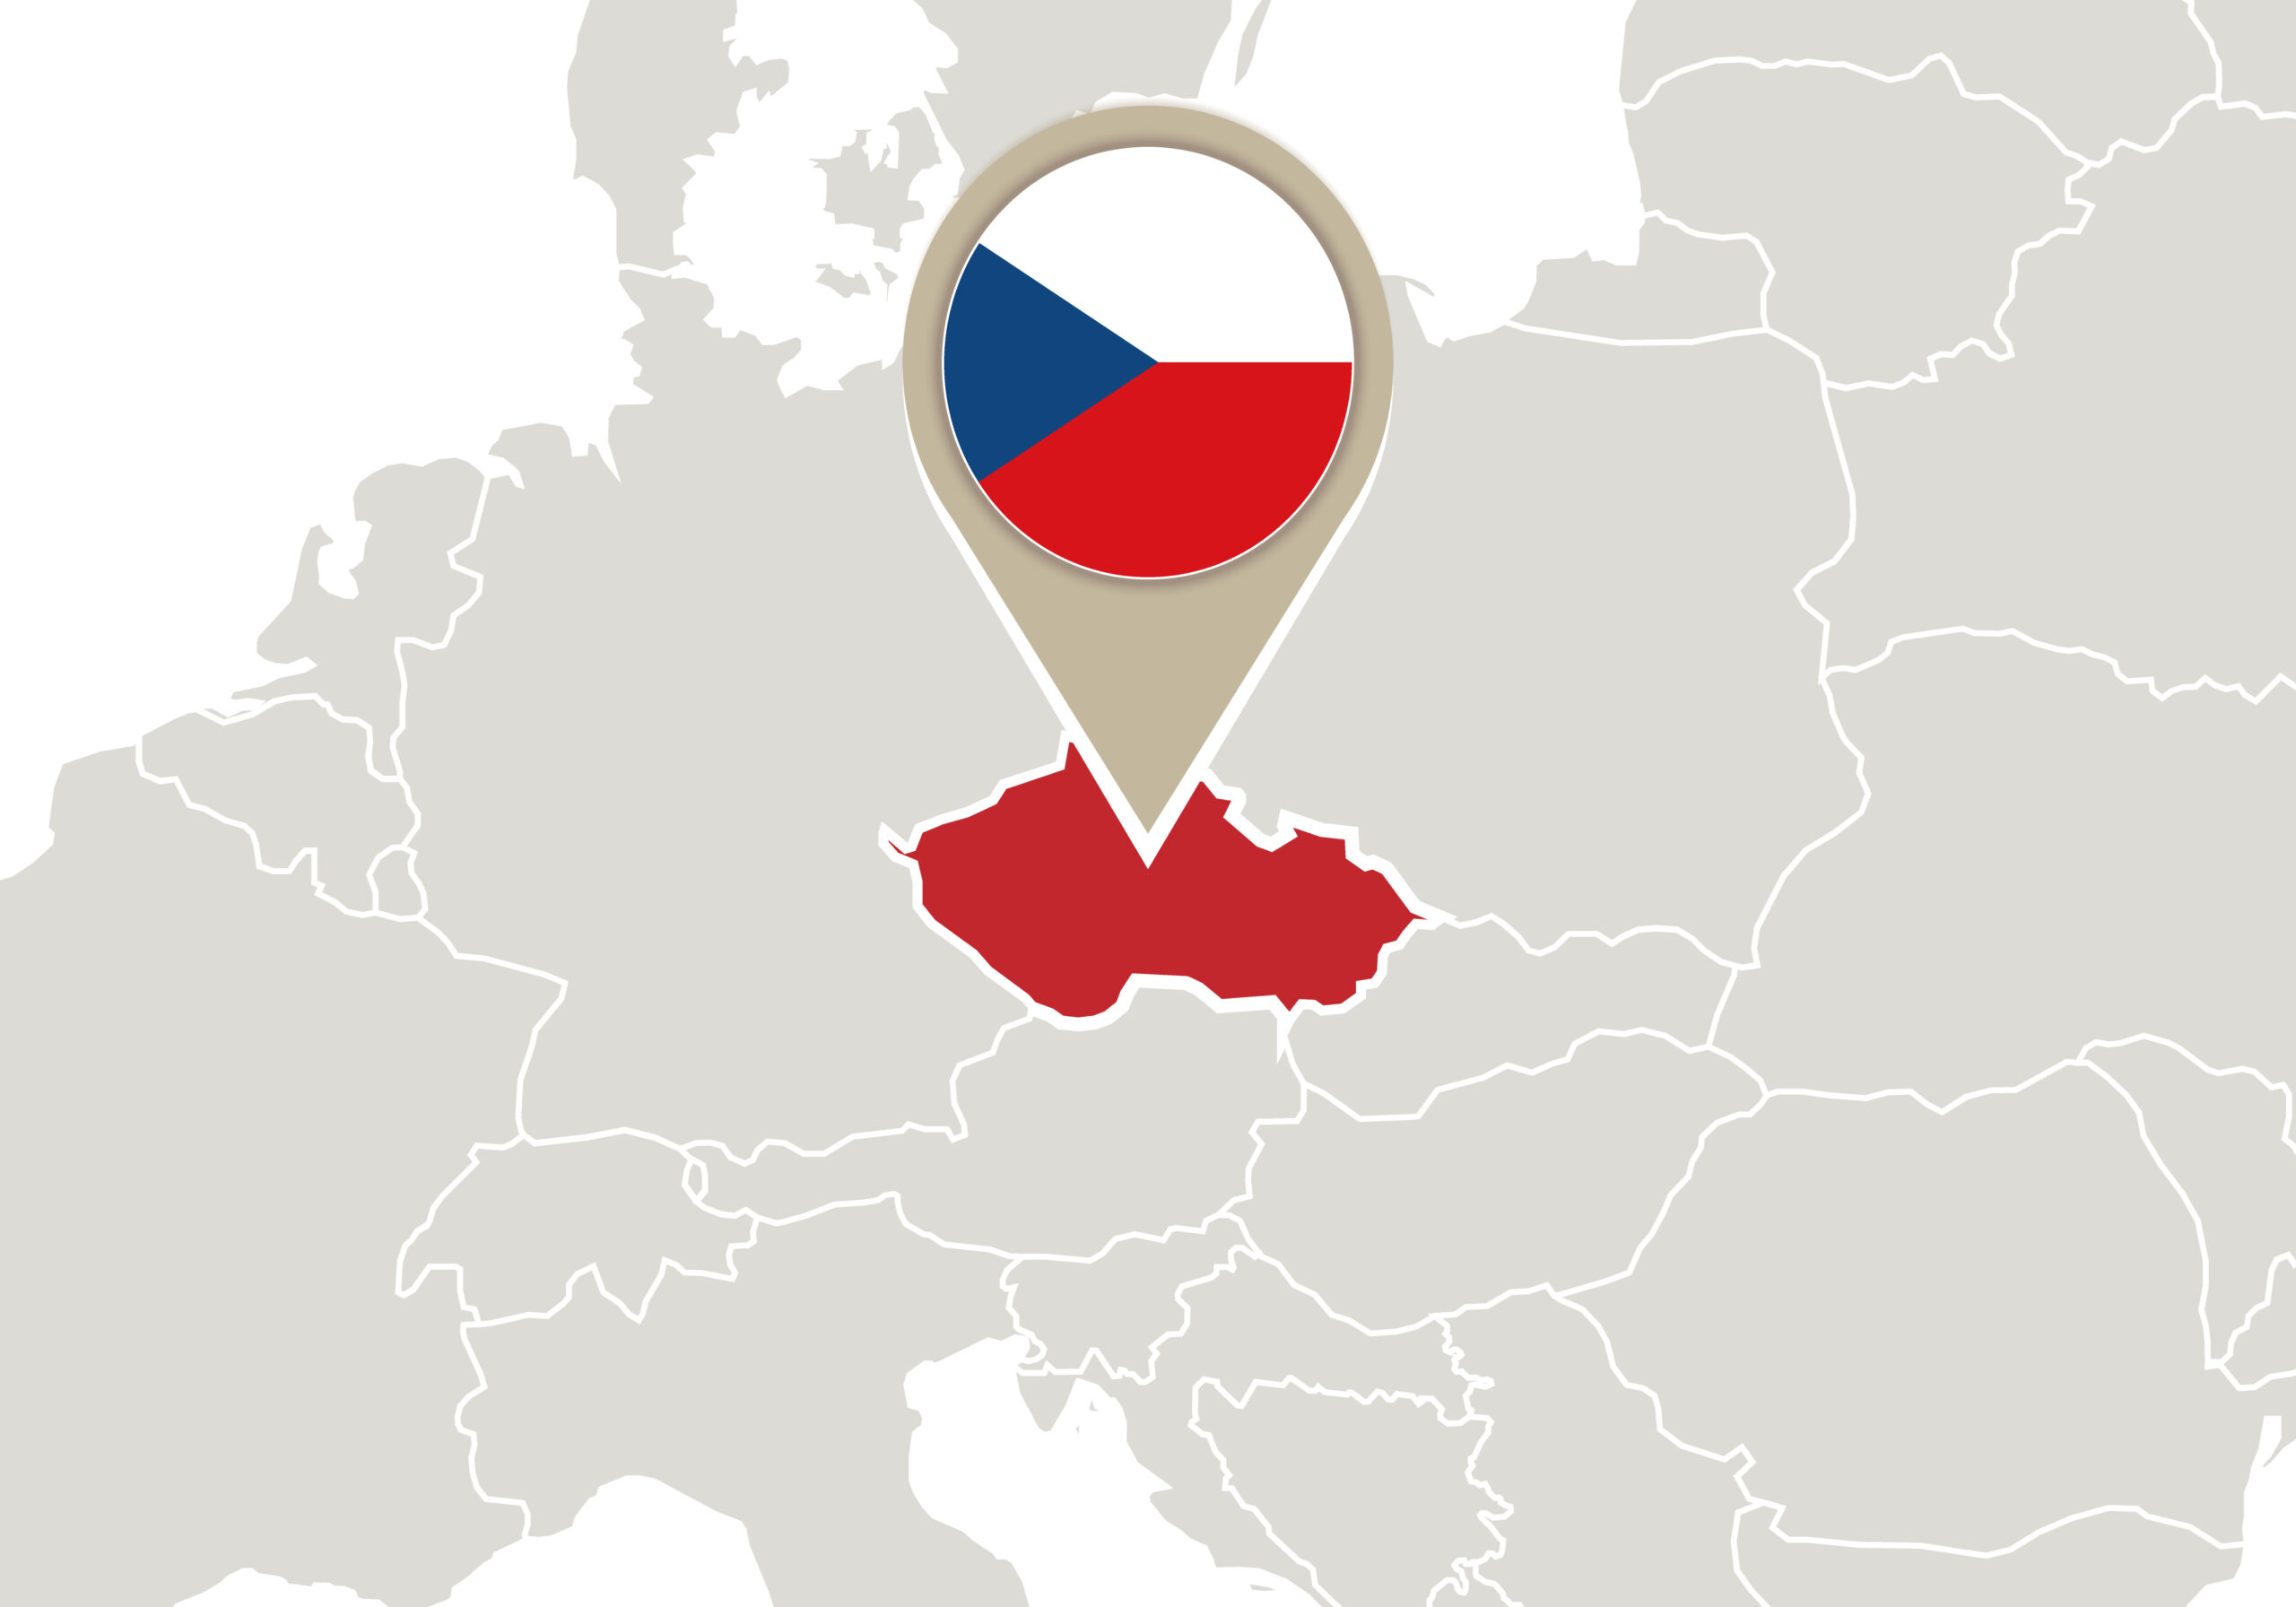 Czech Republic on Europe map